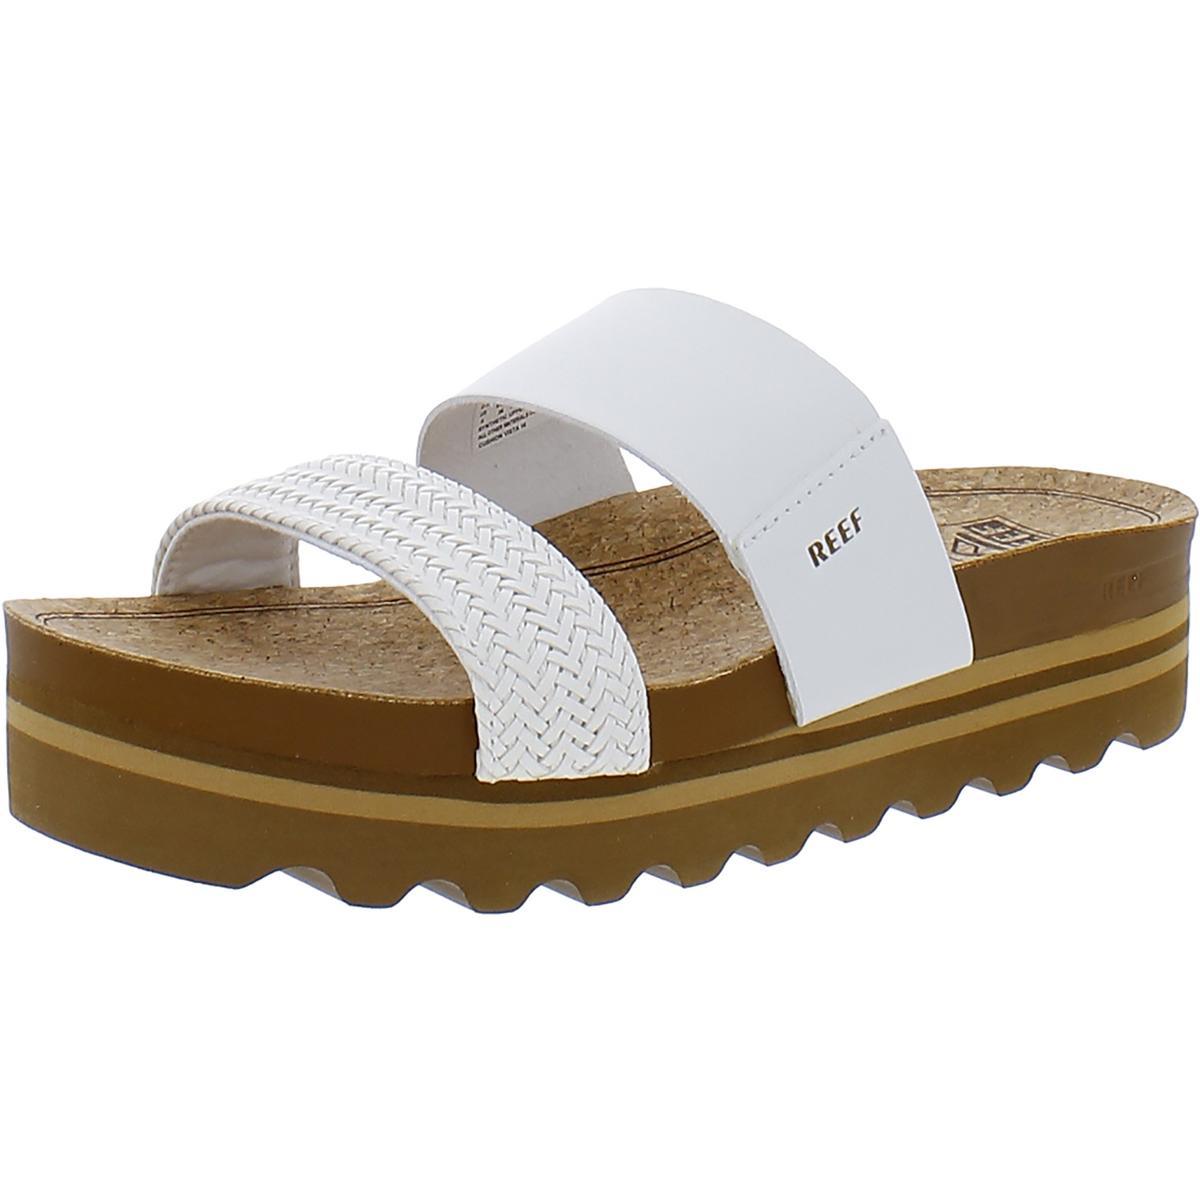 Reef Womens Cushion Vista Hi Padded Insole Slide Sandals Shoes Bhfo 9048 White Braid